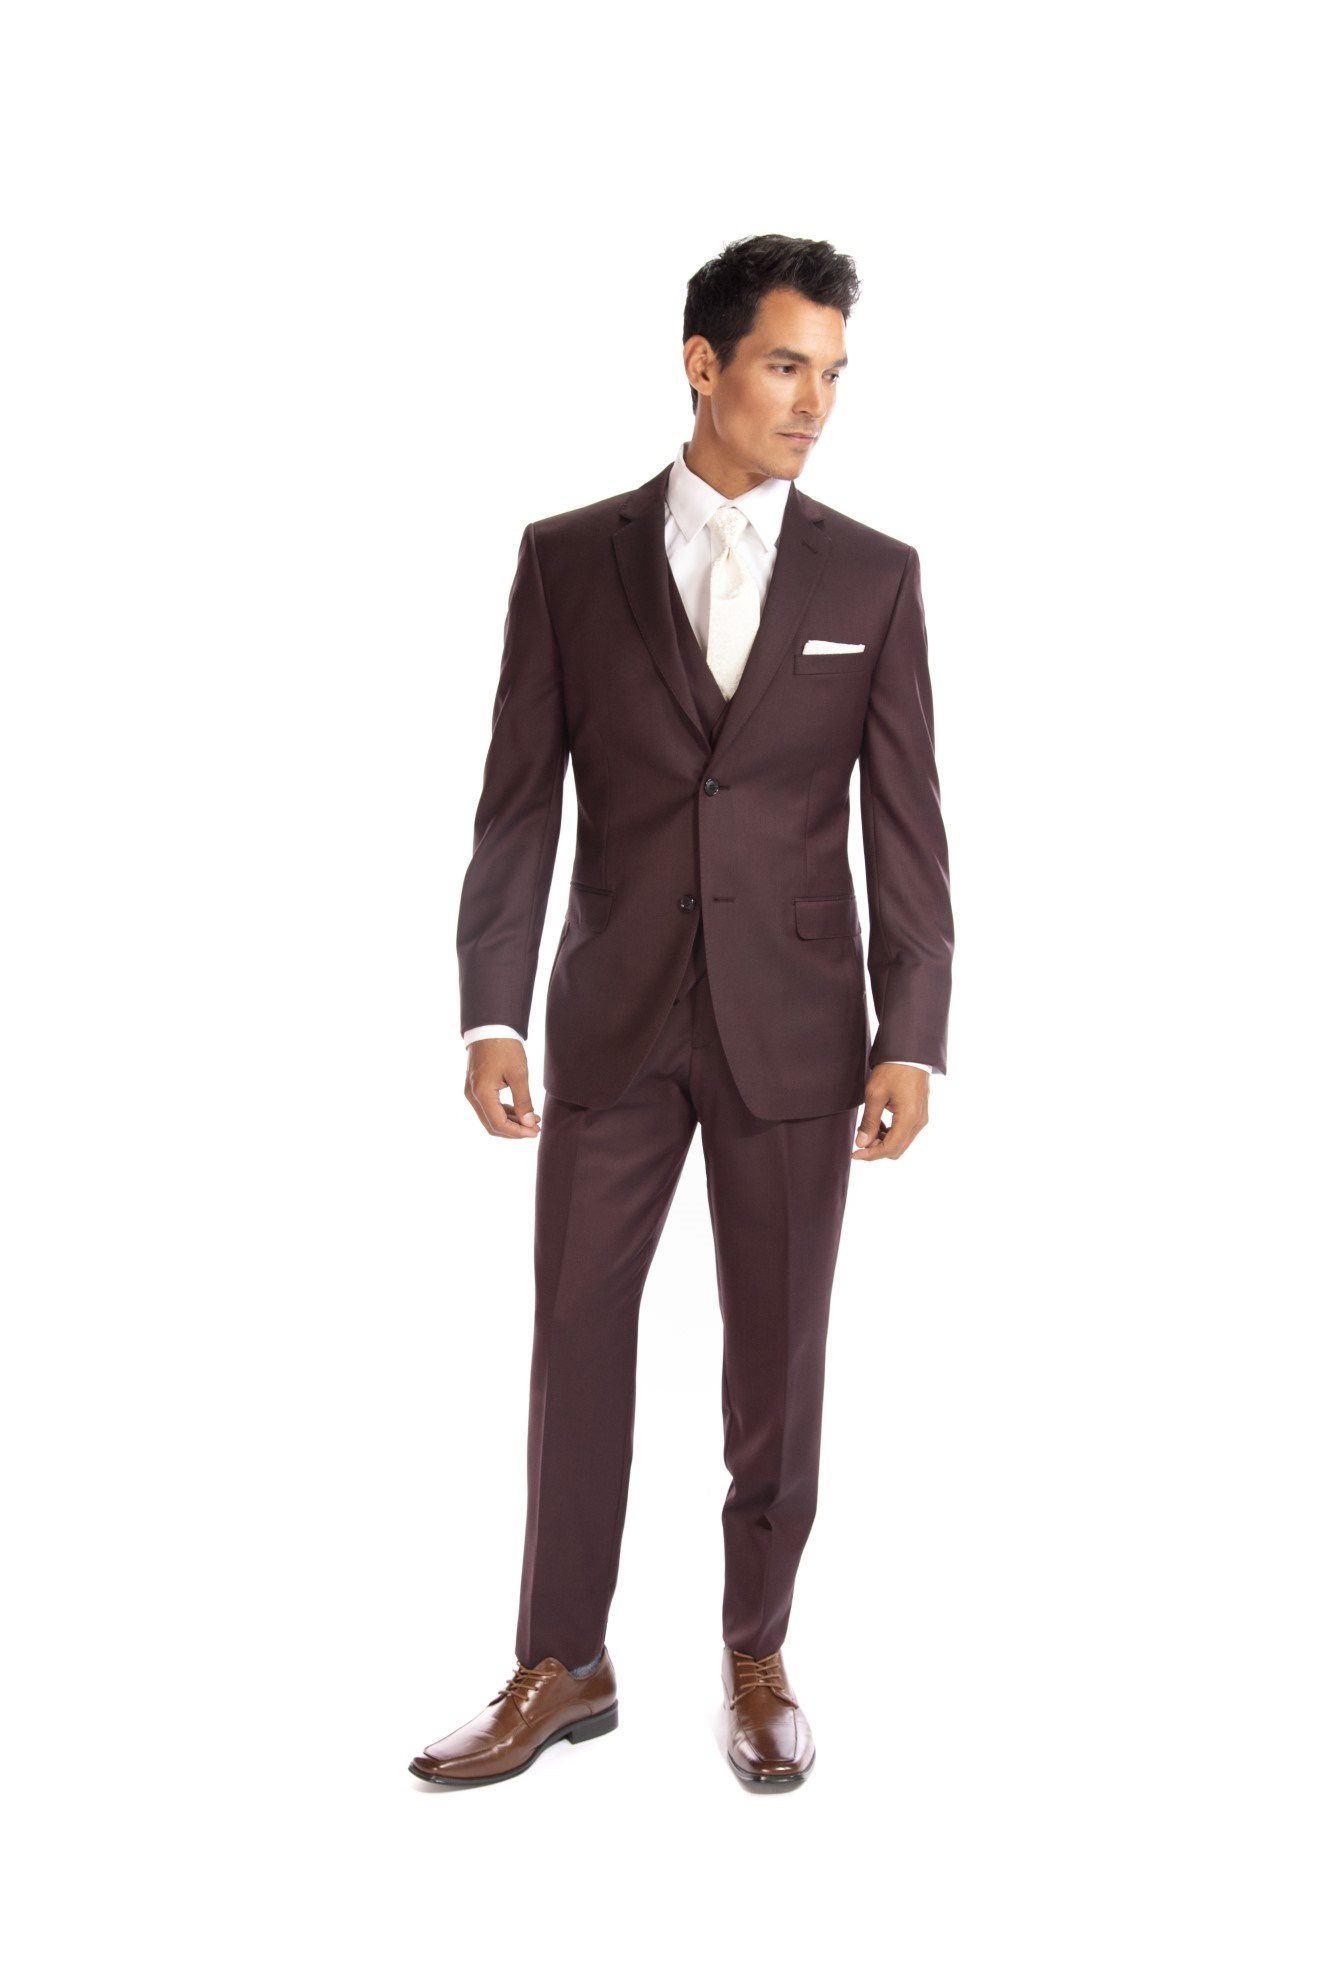 David Major Burgundy Slim Fit Suit